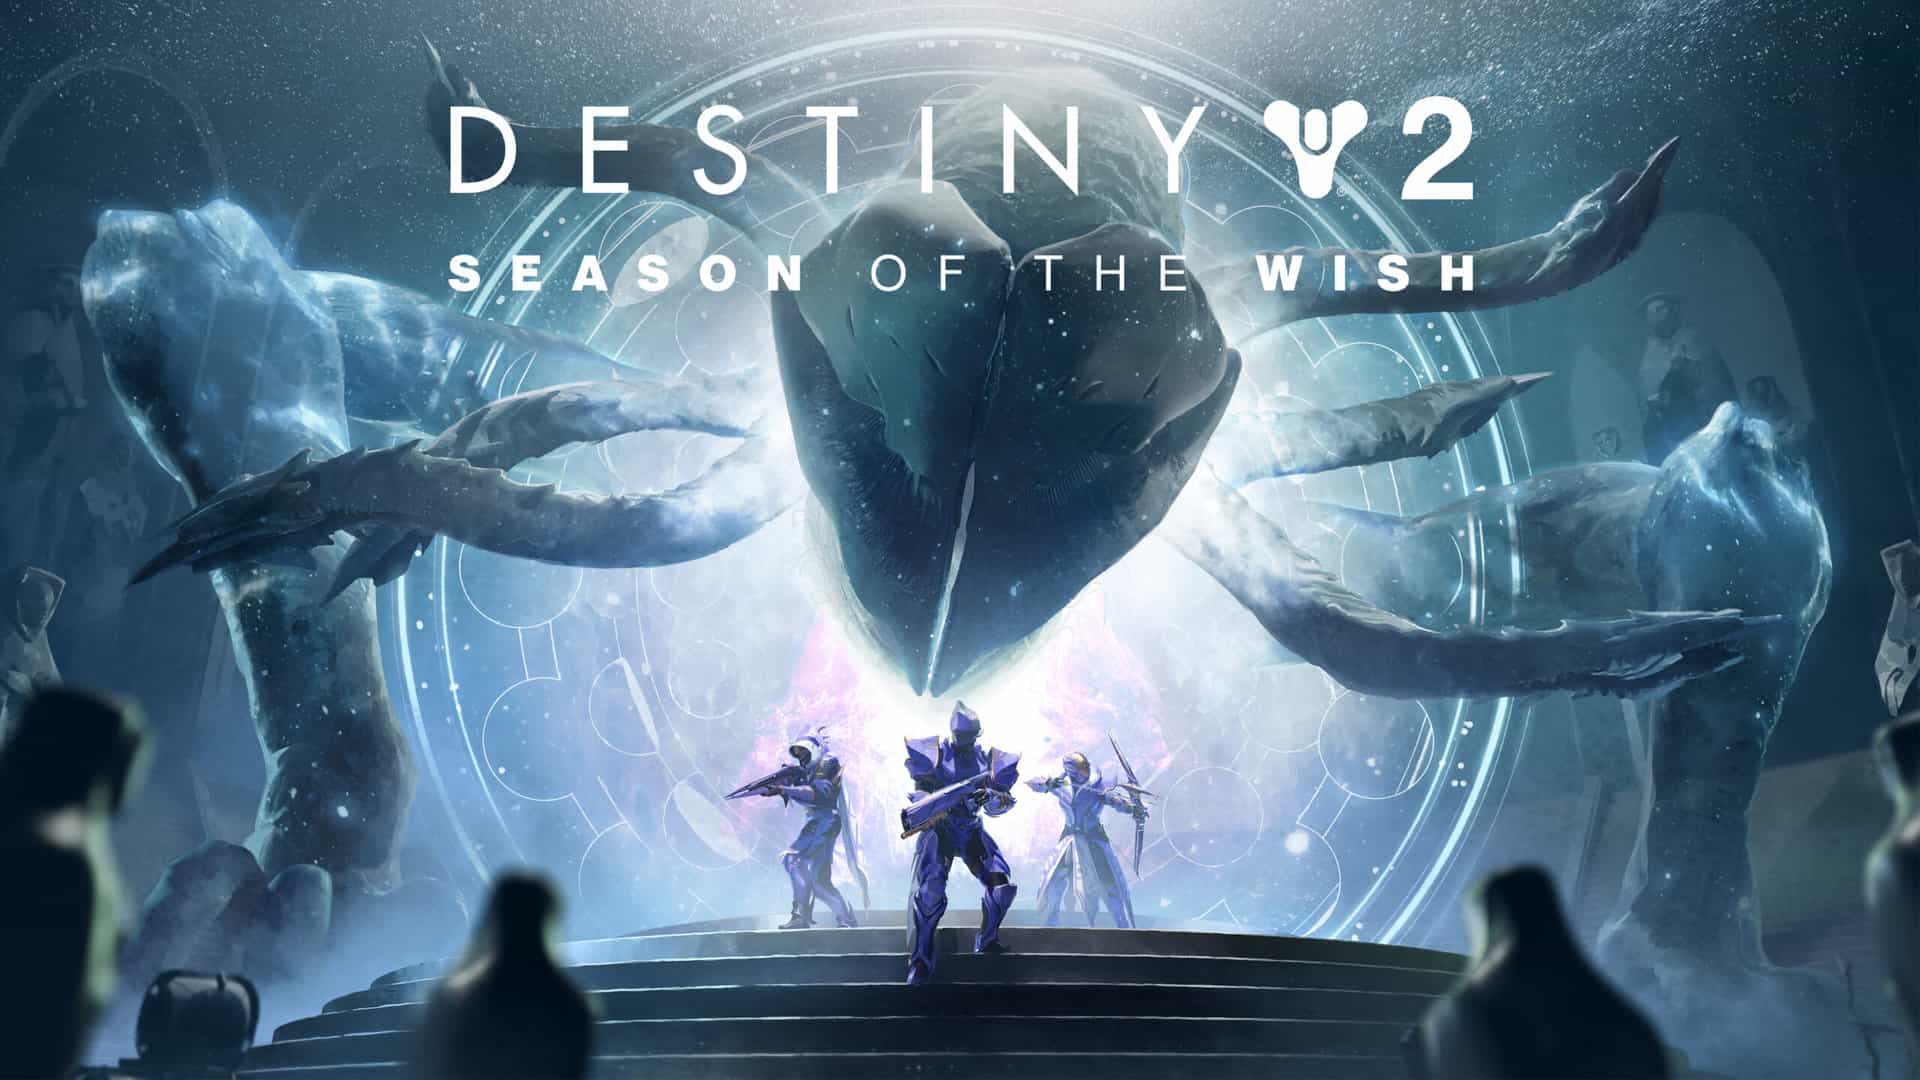 Season of the Wish featued Destiny 2